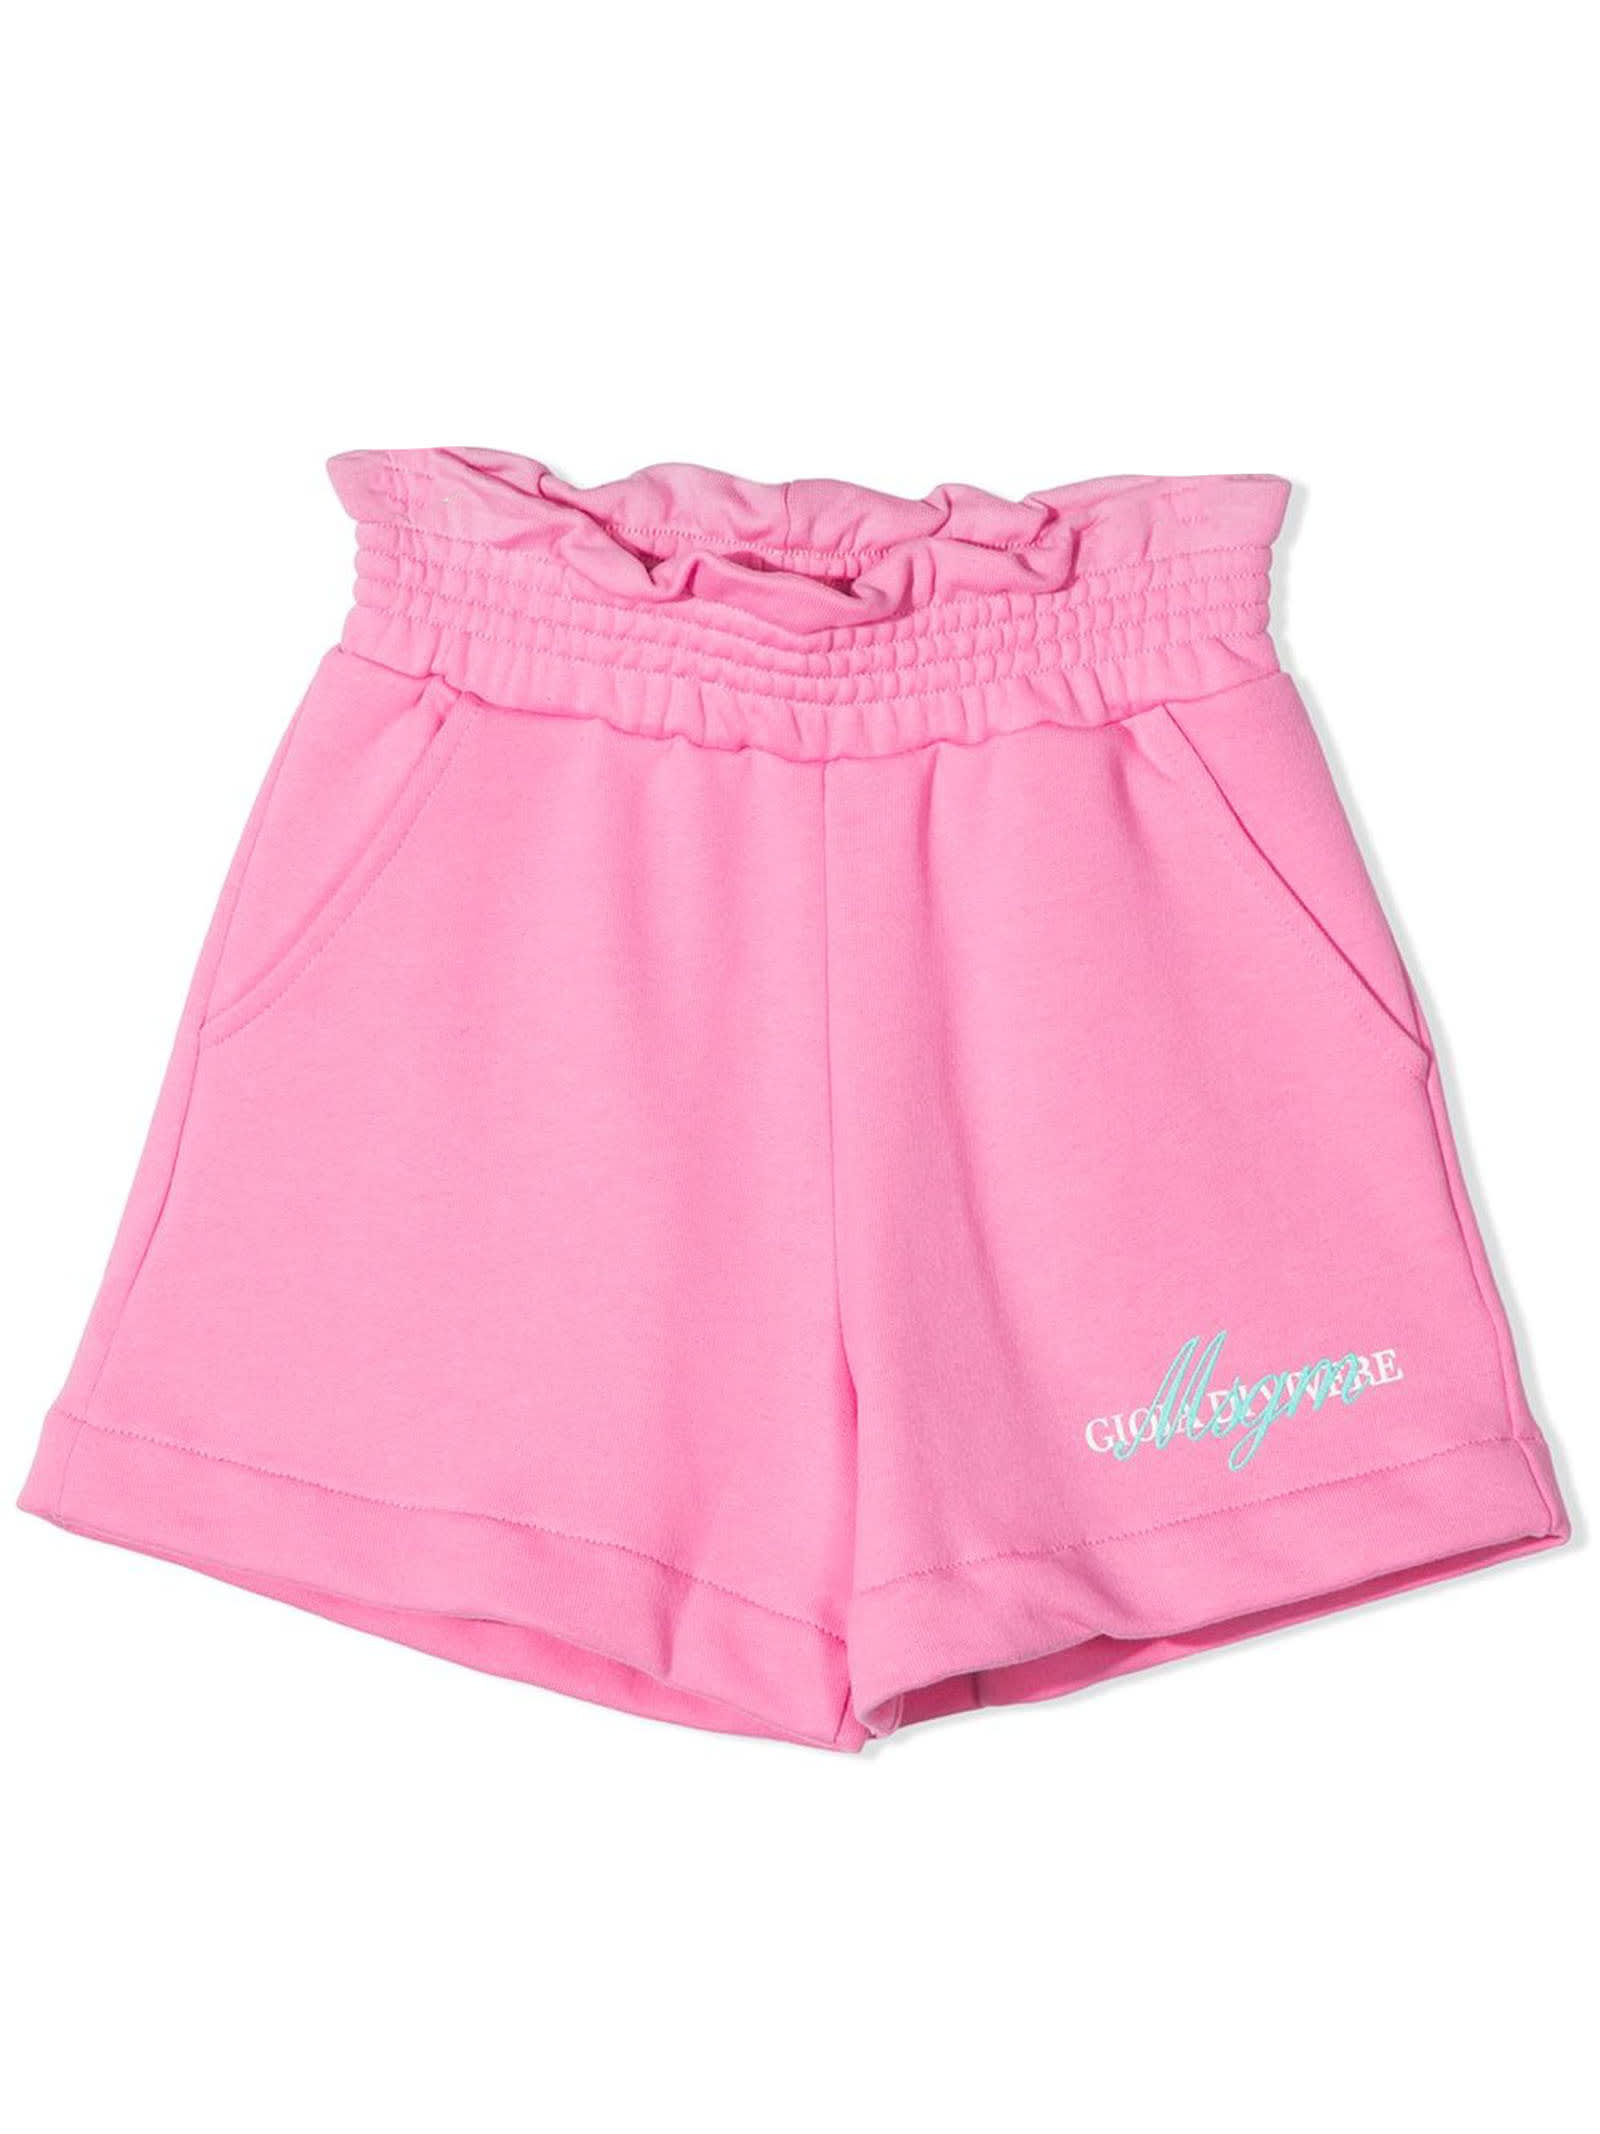 MSGM Pink Cotton Shorts